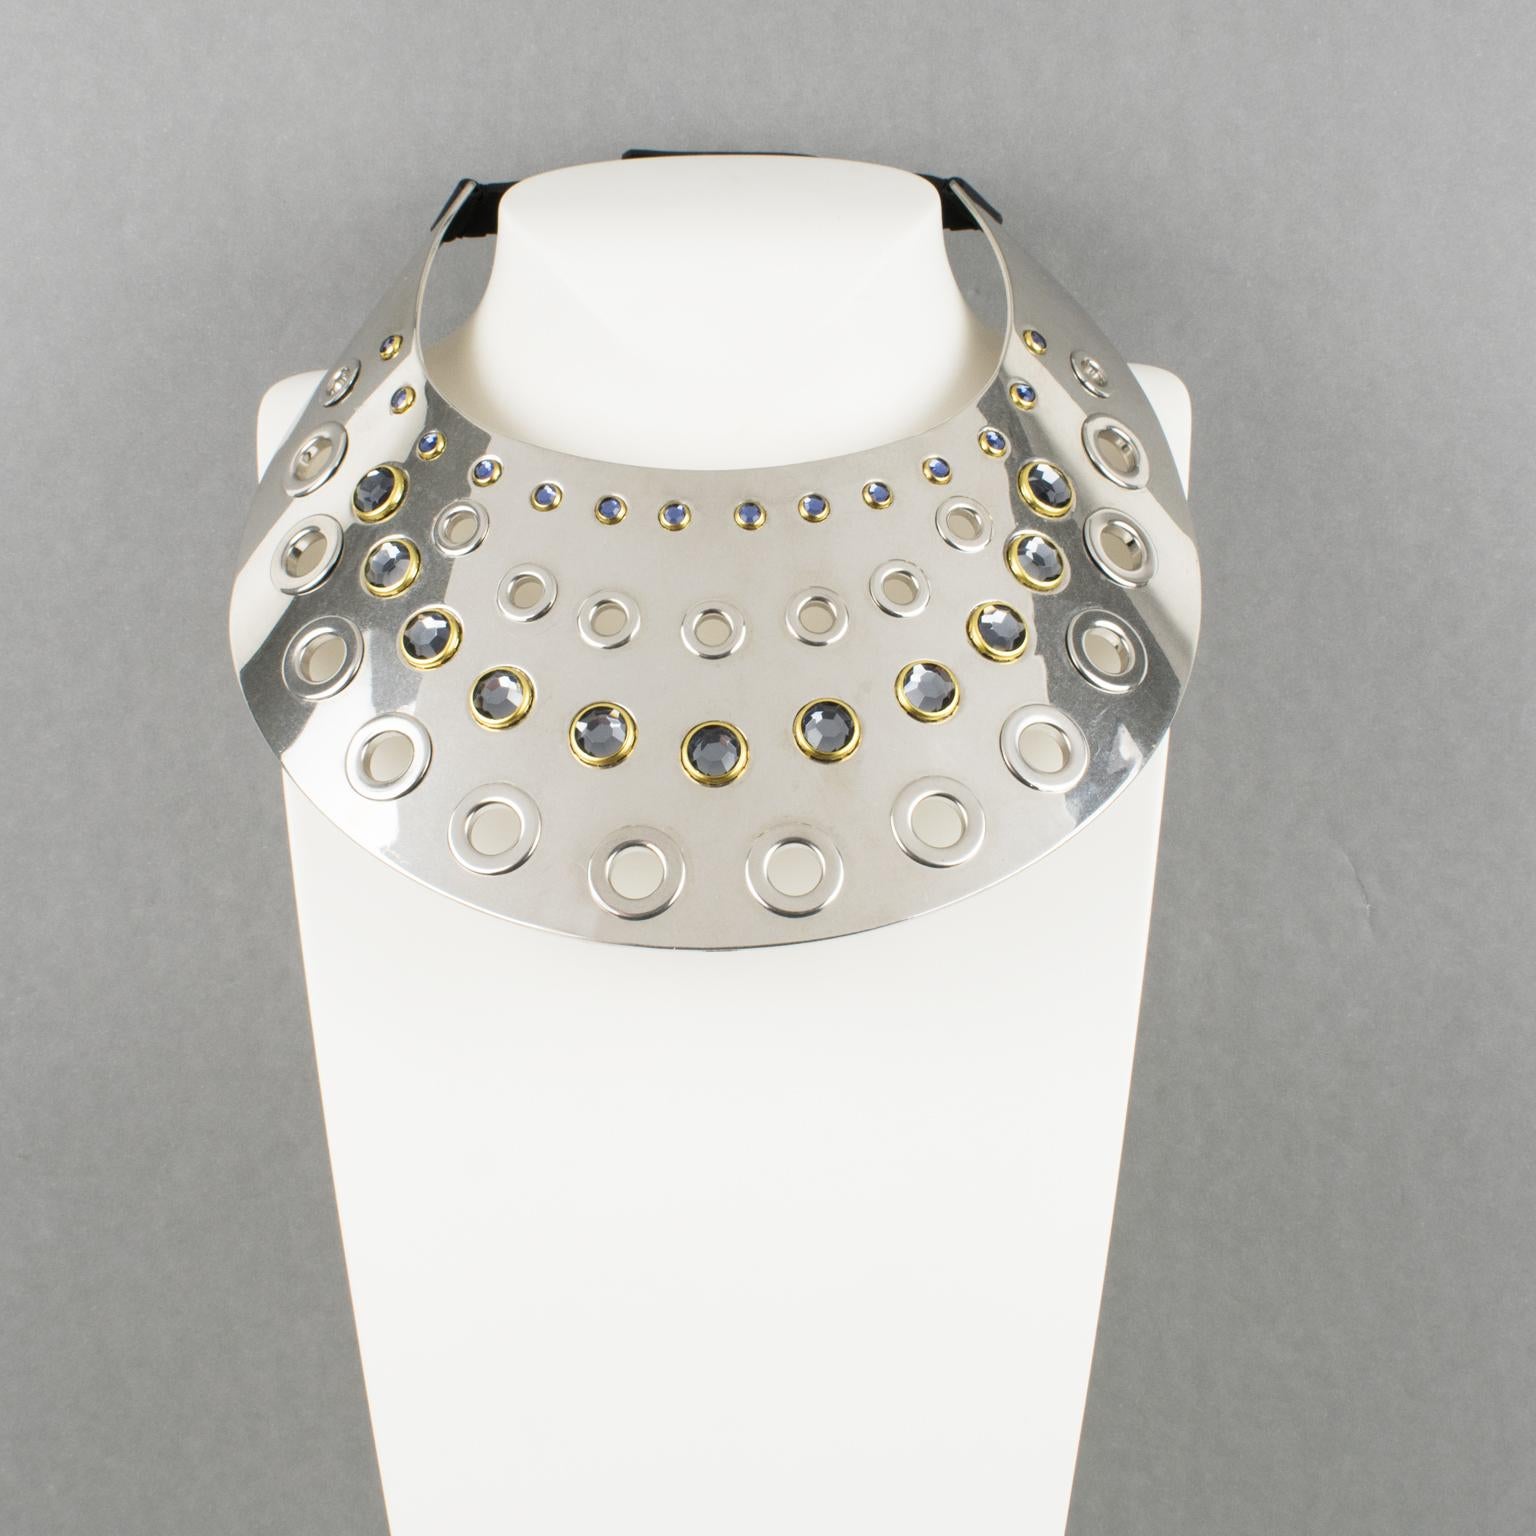 Modernist Sonia Rykiel Paris Futuristic Chrome Bib Necklace with Blue Crystals For Sale